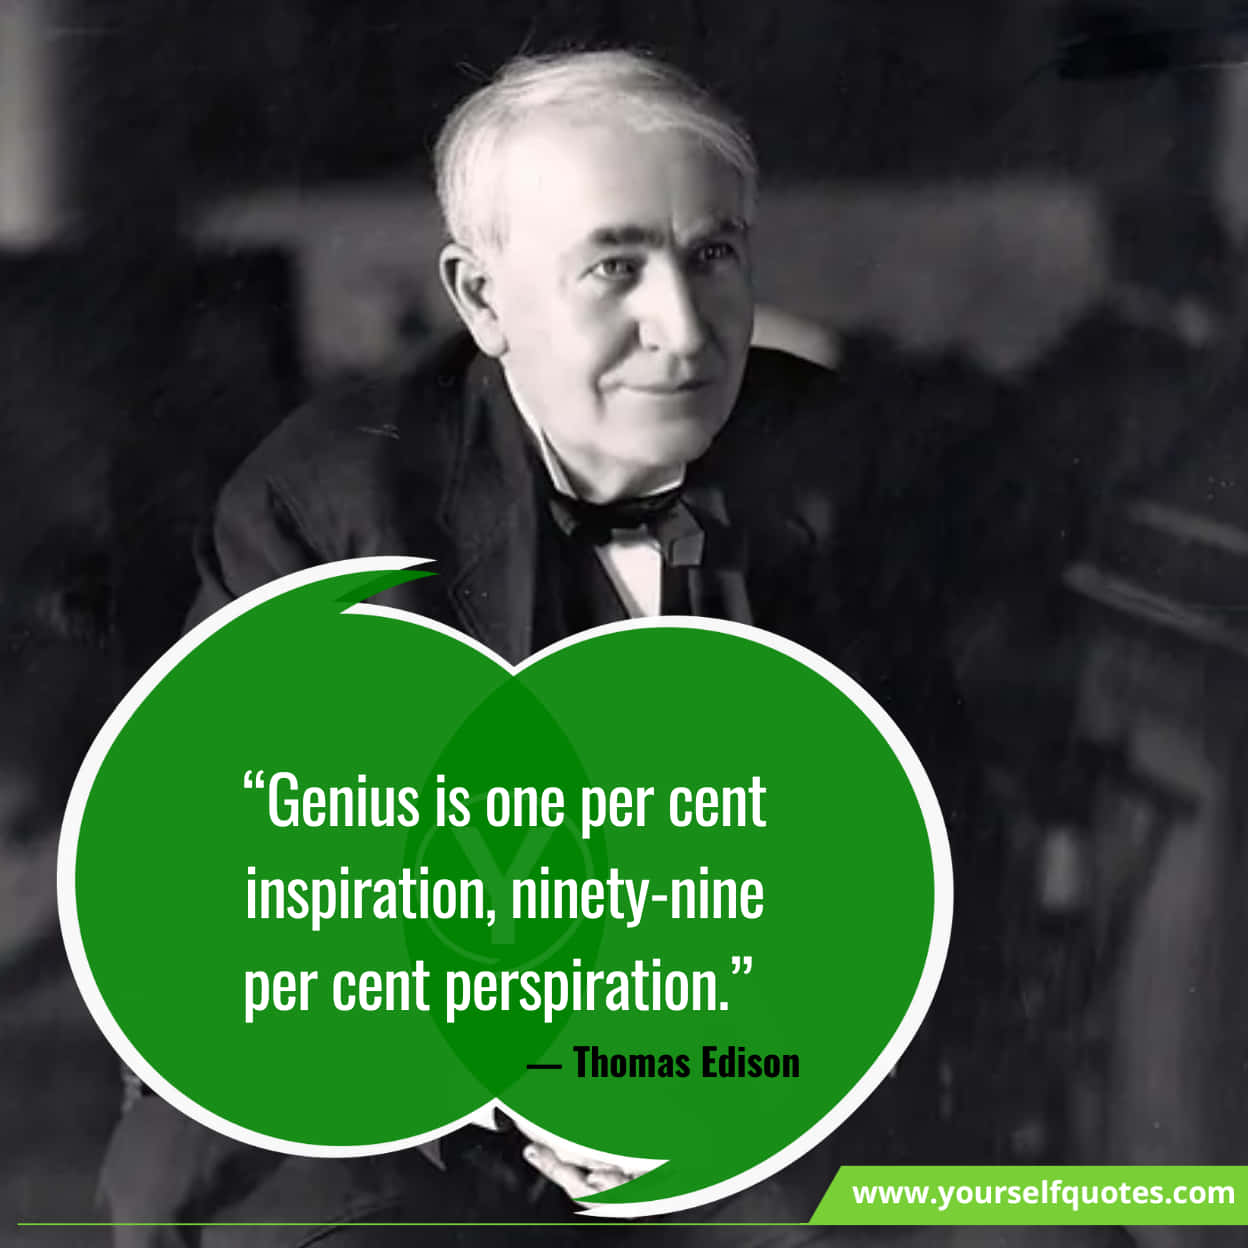 Thomas Edison Quotes For Motivation